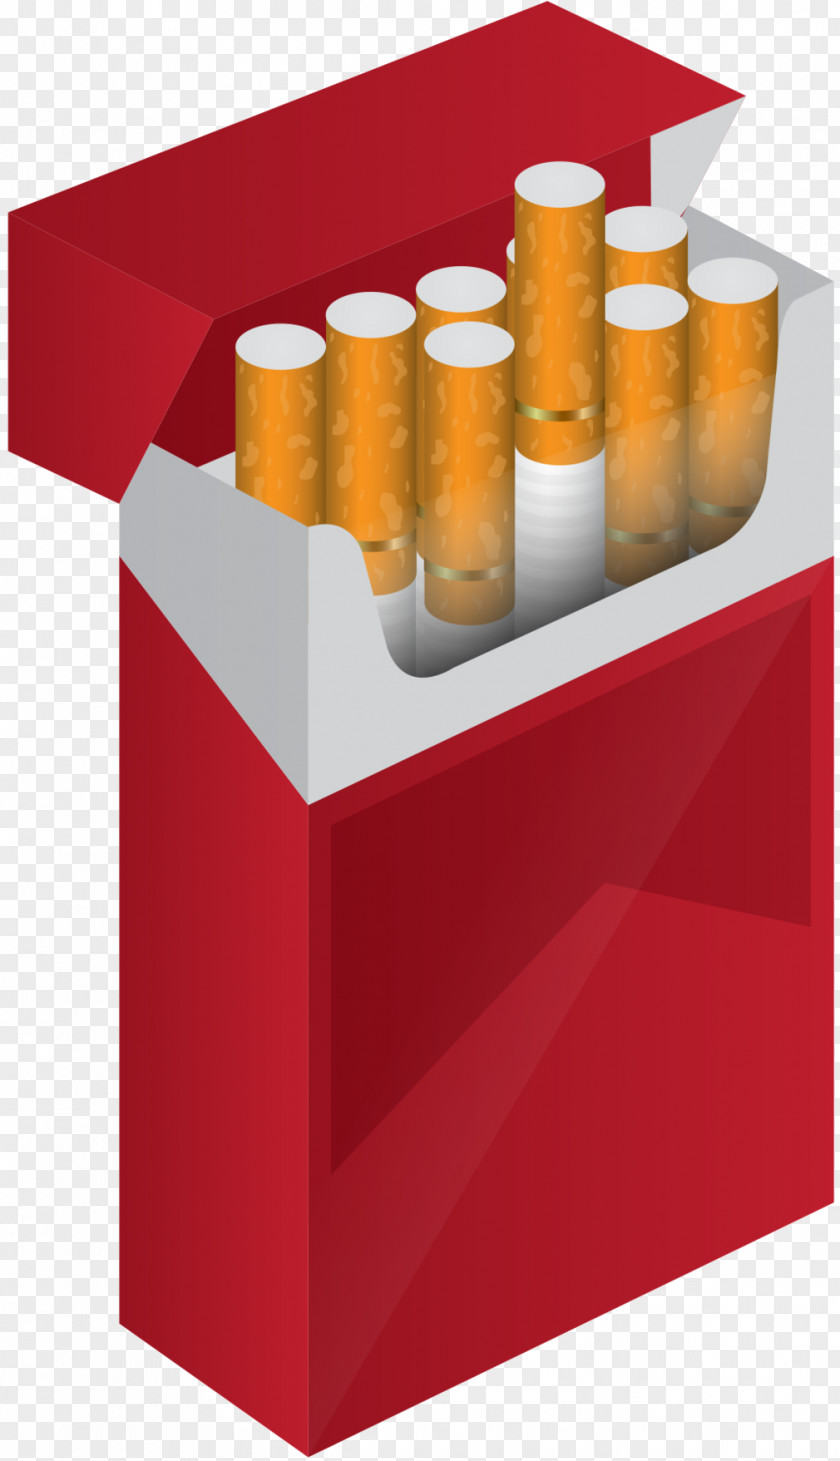 Cigarette Vector Graphics World No Tobacco Day Design Smoking Cessation PNG